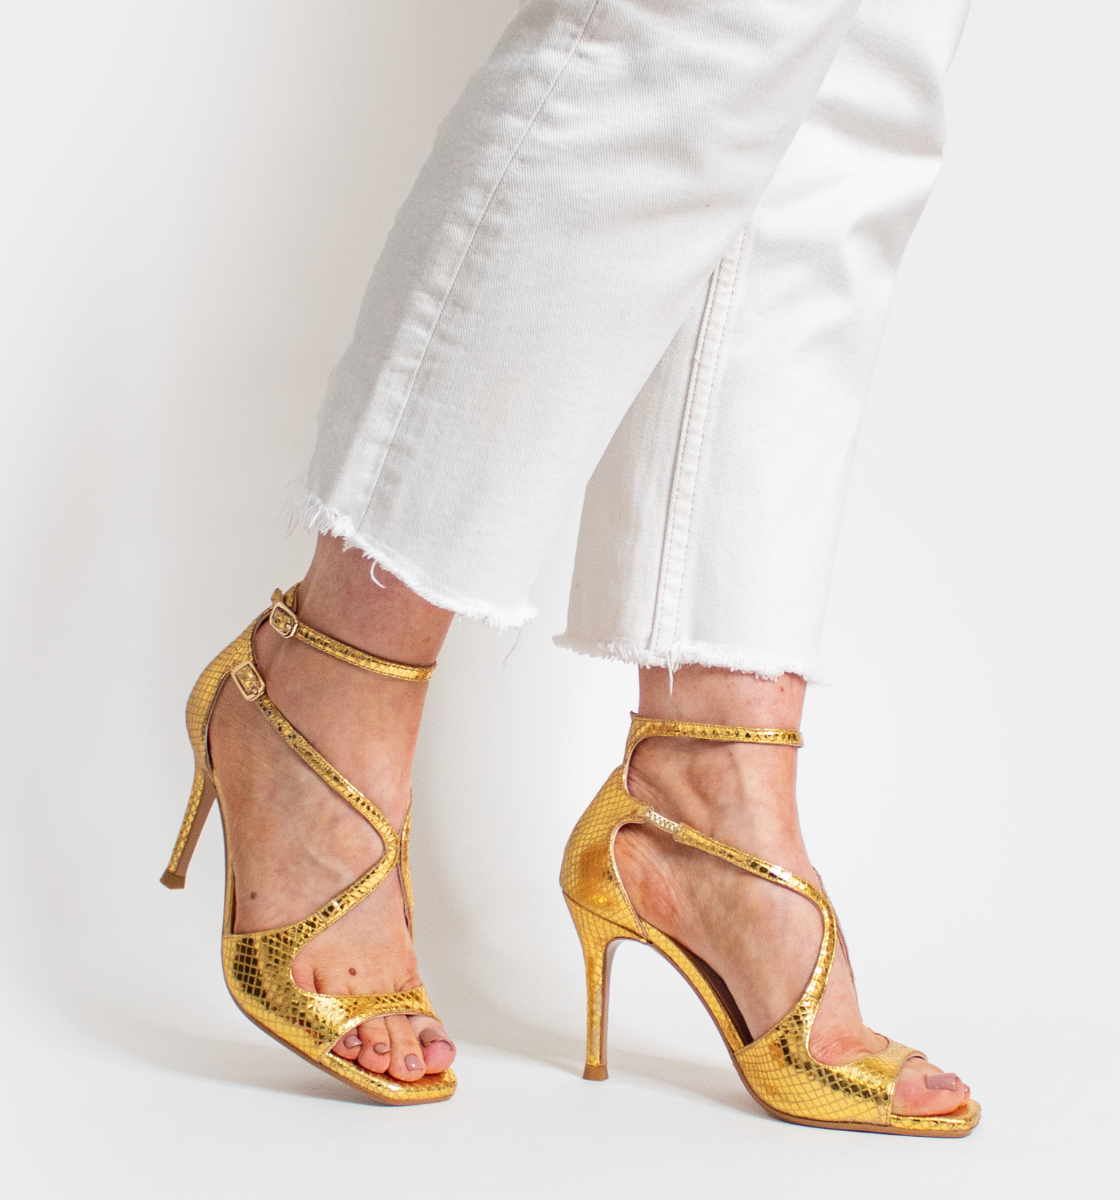 heeled sandals for Women, High heels